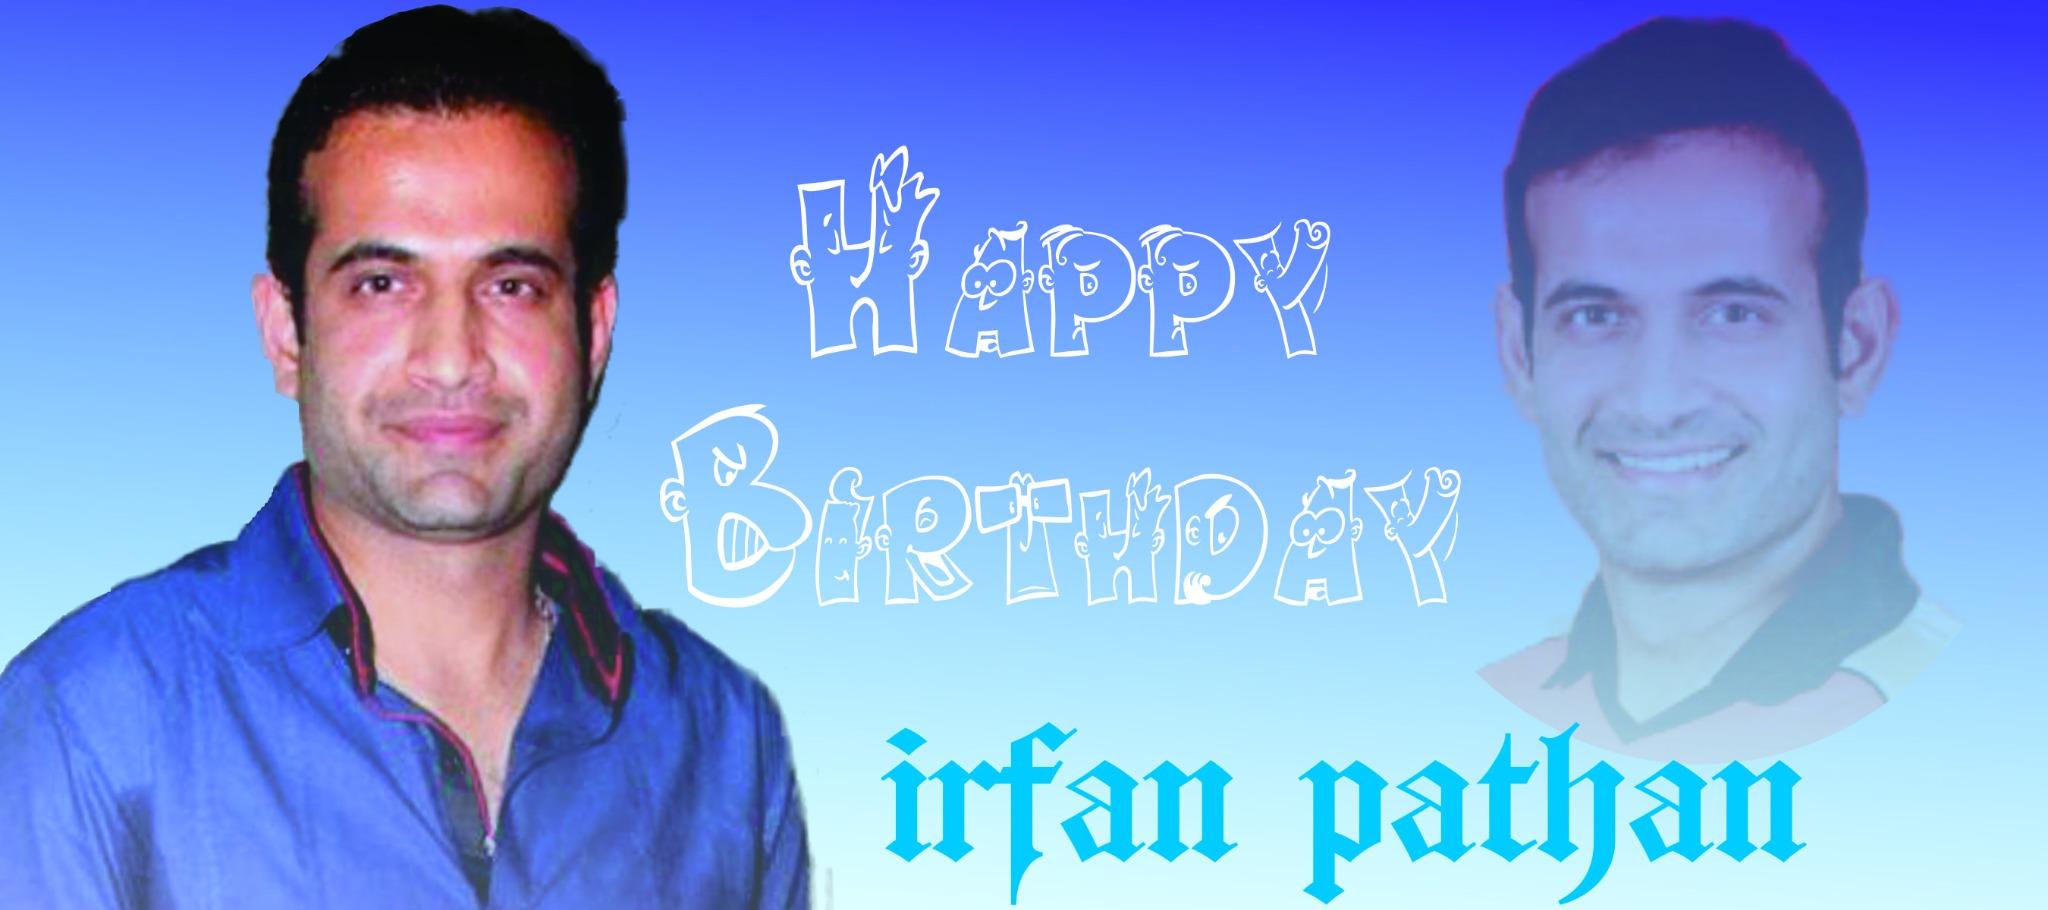 Happy birthday to irfan pathan 